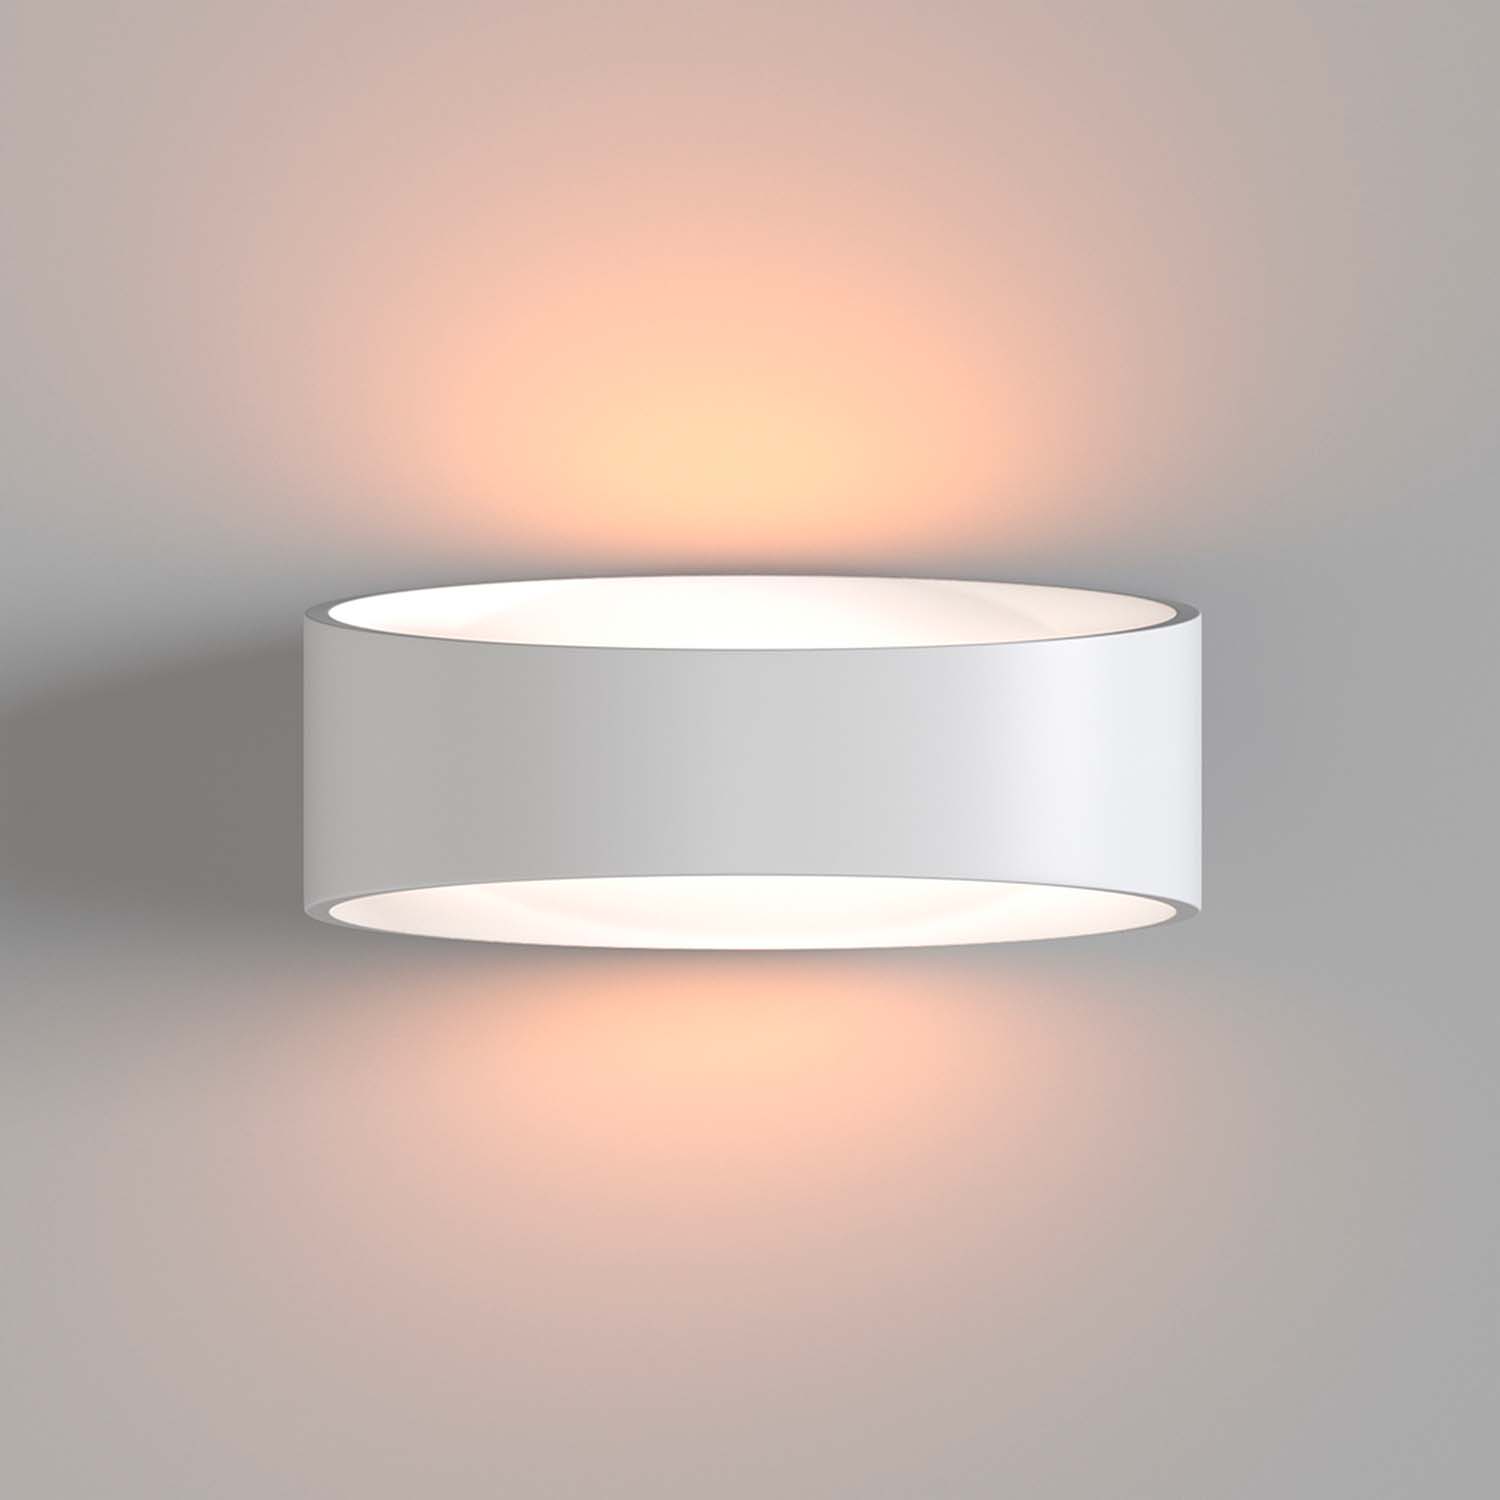 TRAME - Elliptical design wall light in white or black steel